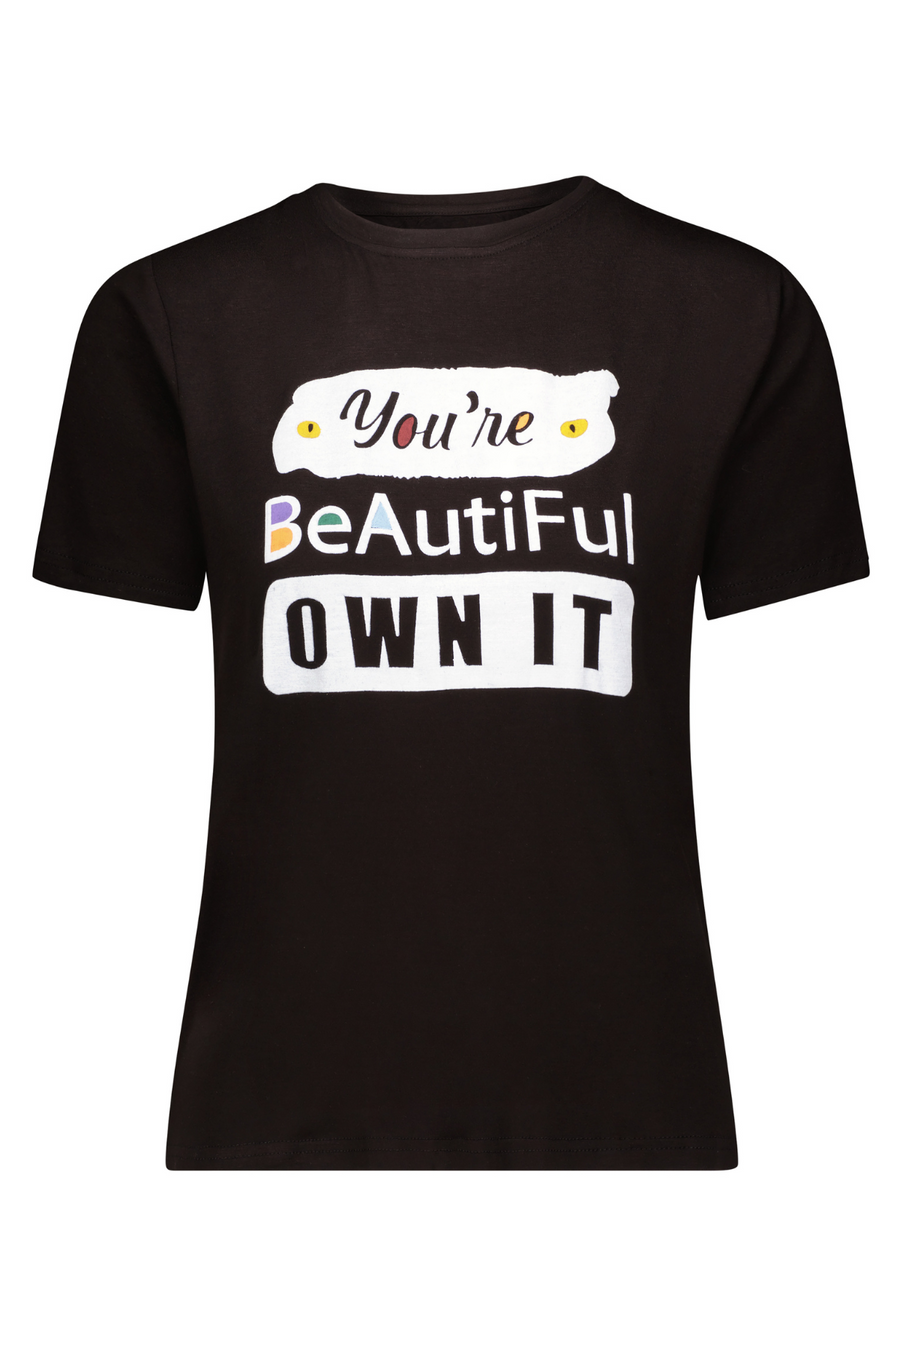 You're Beautiful Own It Cotton T-Shirt II in Black - Furkat & Robbie